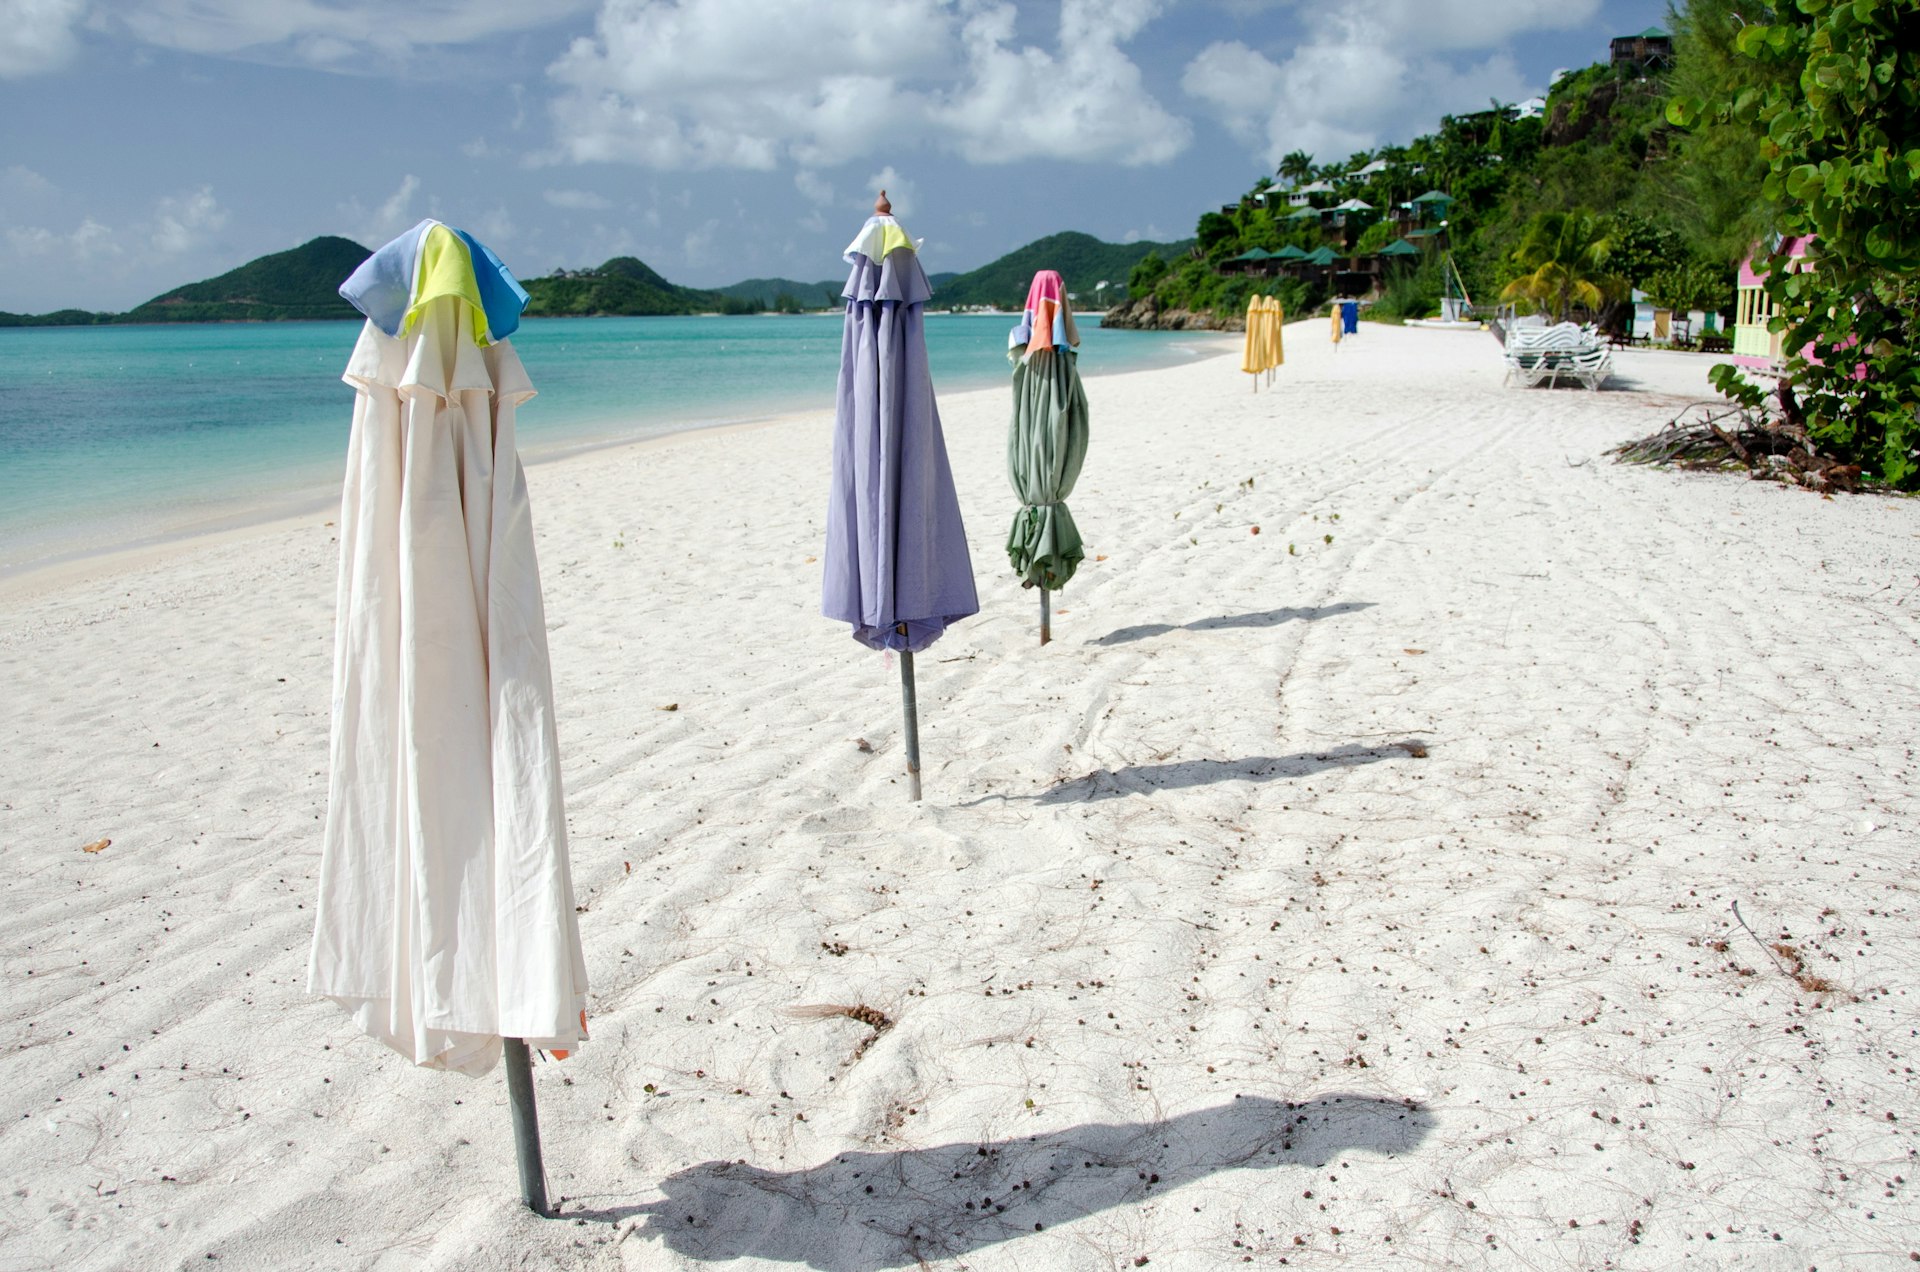 Row of beach umbrellas crosses white sands of Church Valley beach